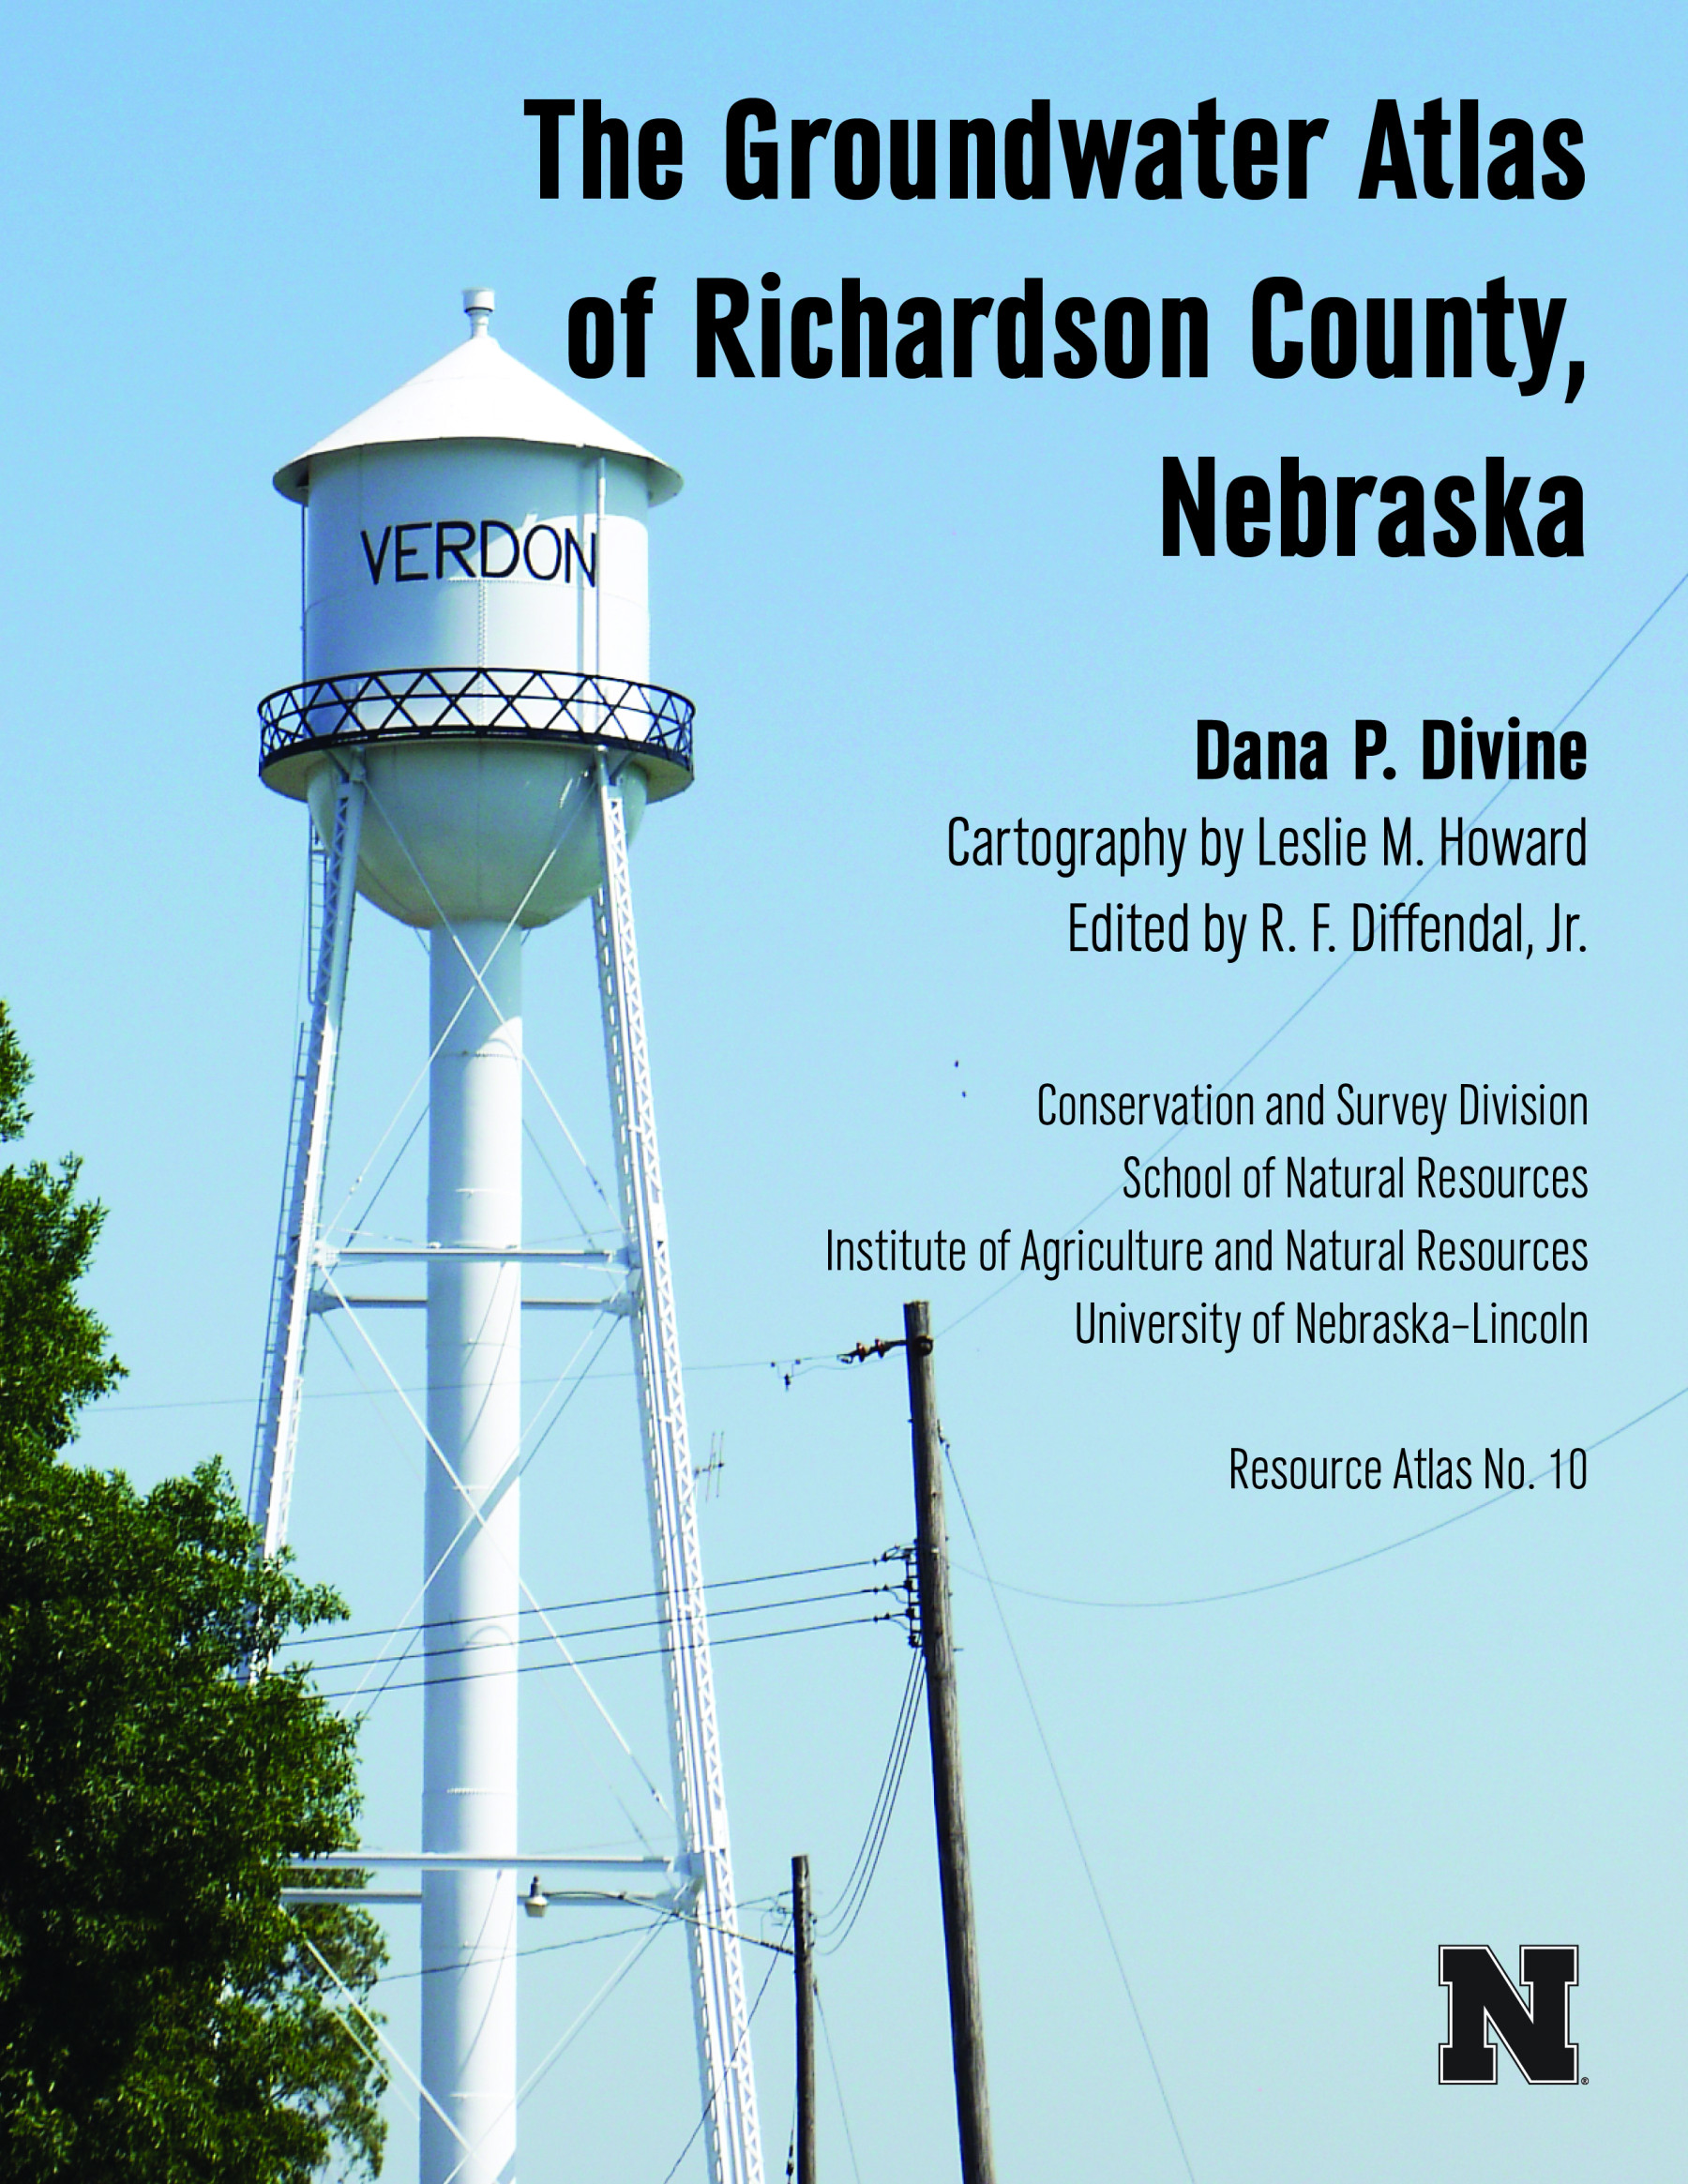 The Groundwater Atlas of Richardson County, Nebraska (RA-10) 